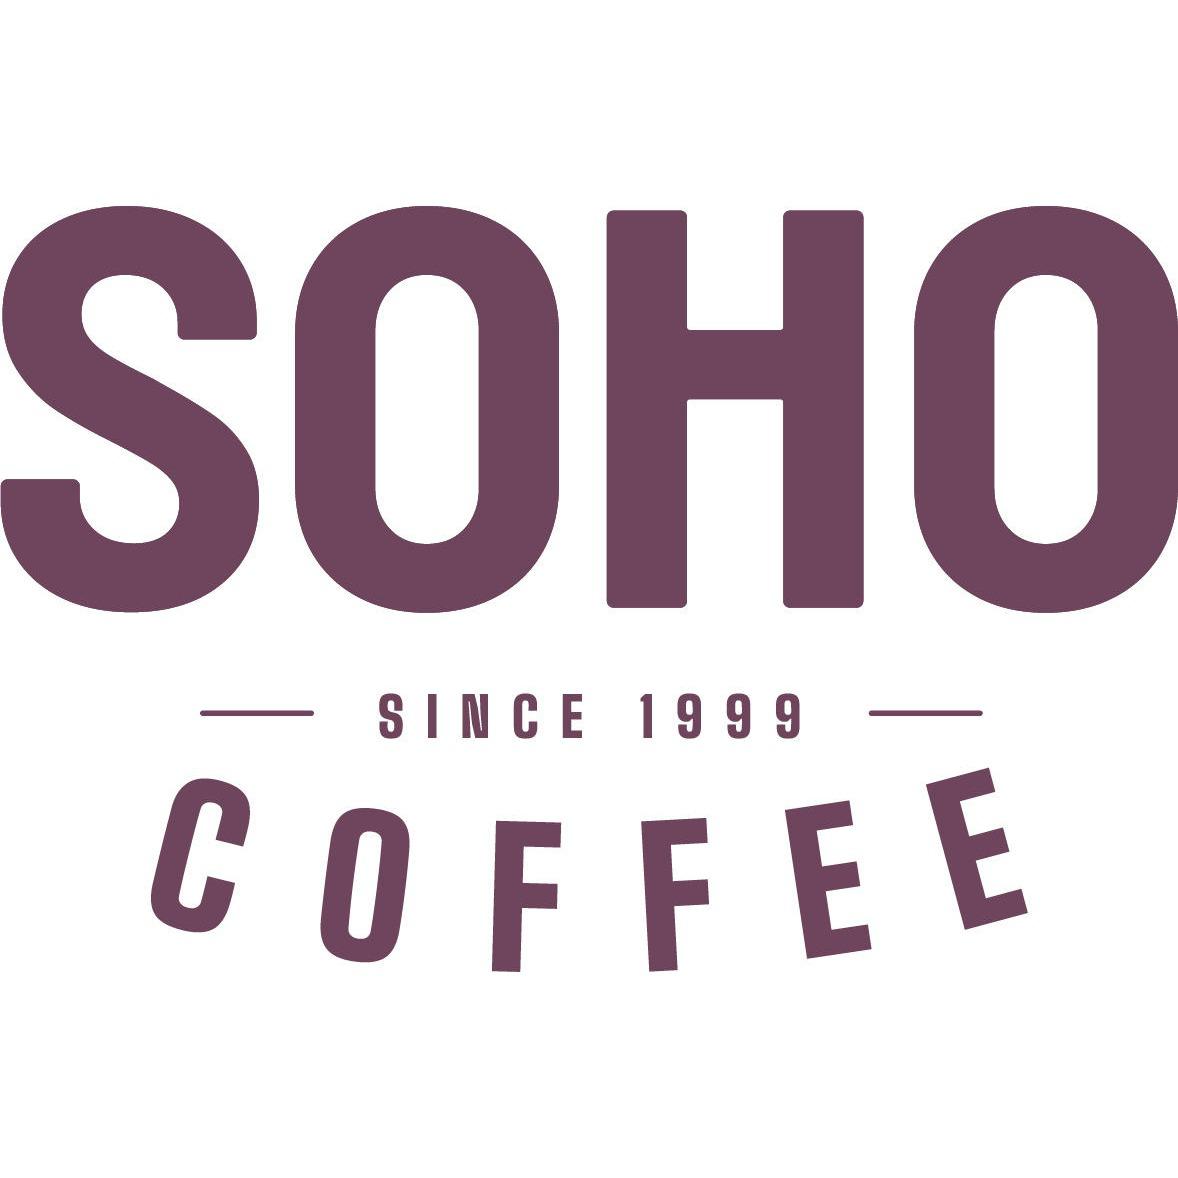 SOHO Coffee - Bristol, Bristol BS1 3BH - 01173 700706 | ShowMeLocal.com